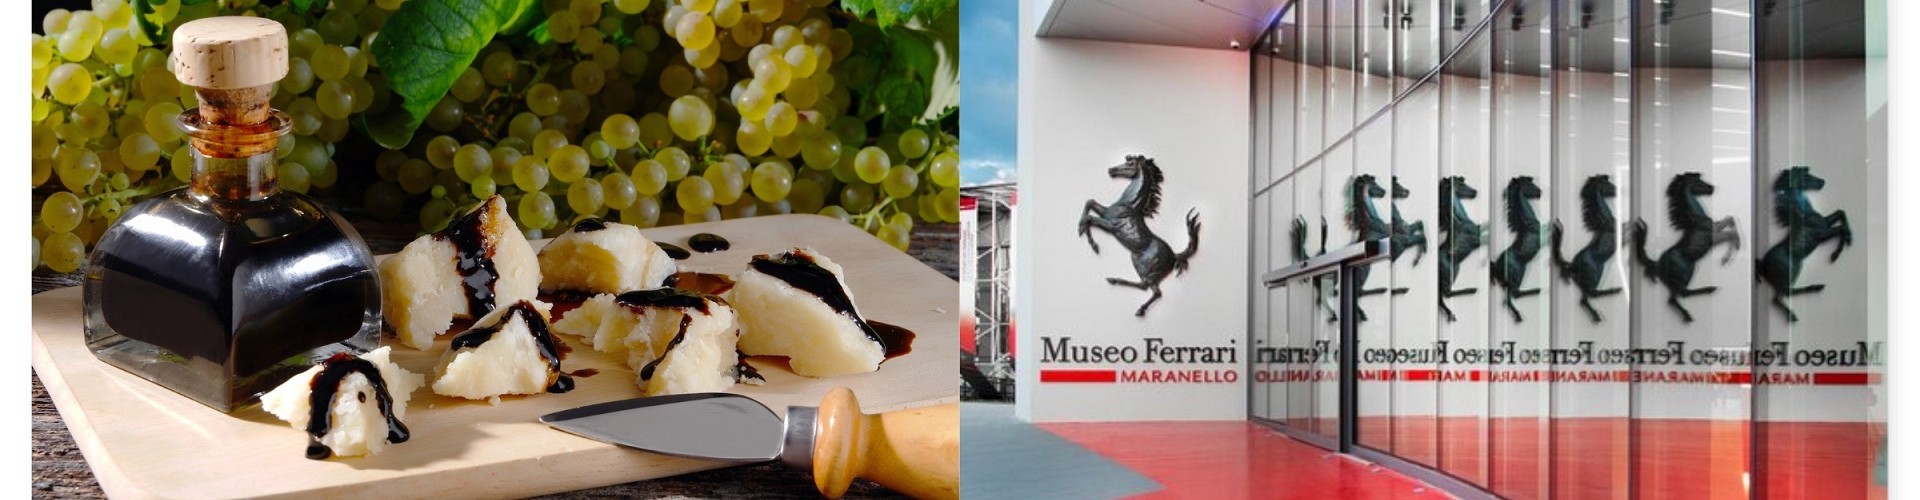 Ferrari Tour from Florence to Maranello | Shore excursion from La Spezia to Ferrari car factory